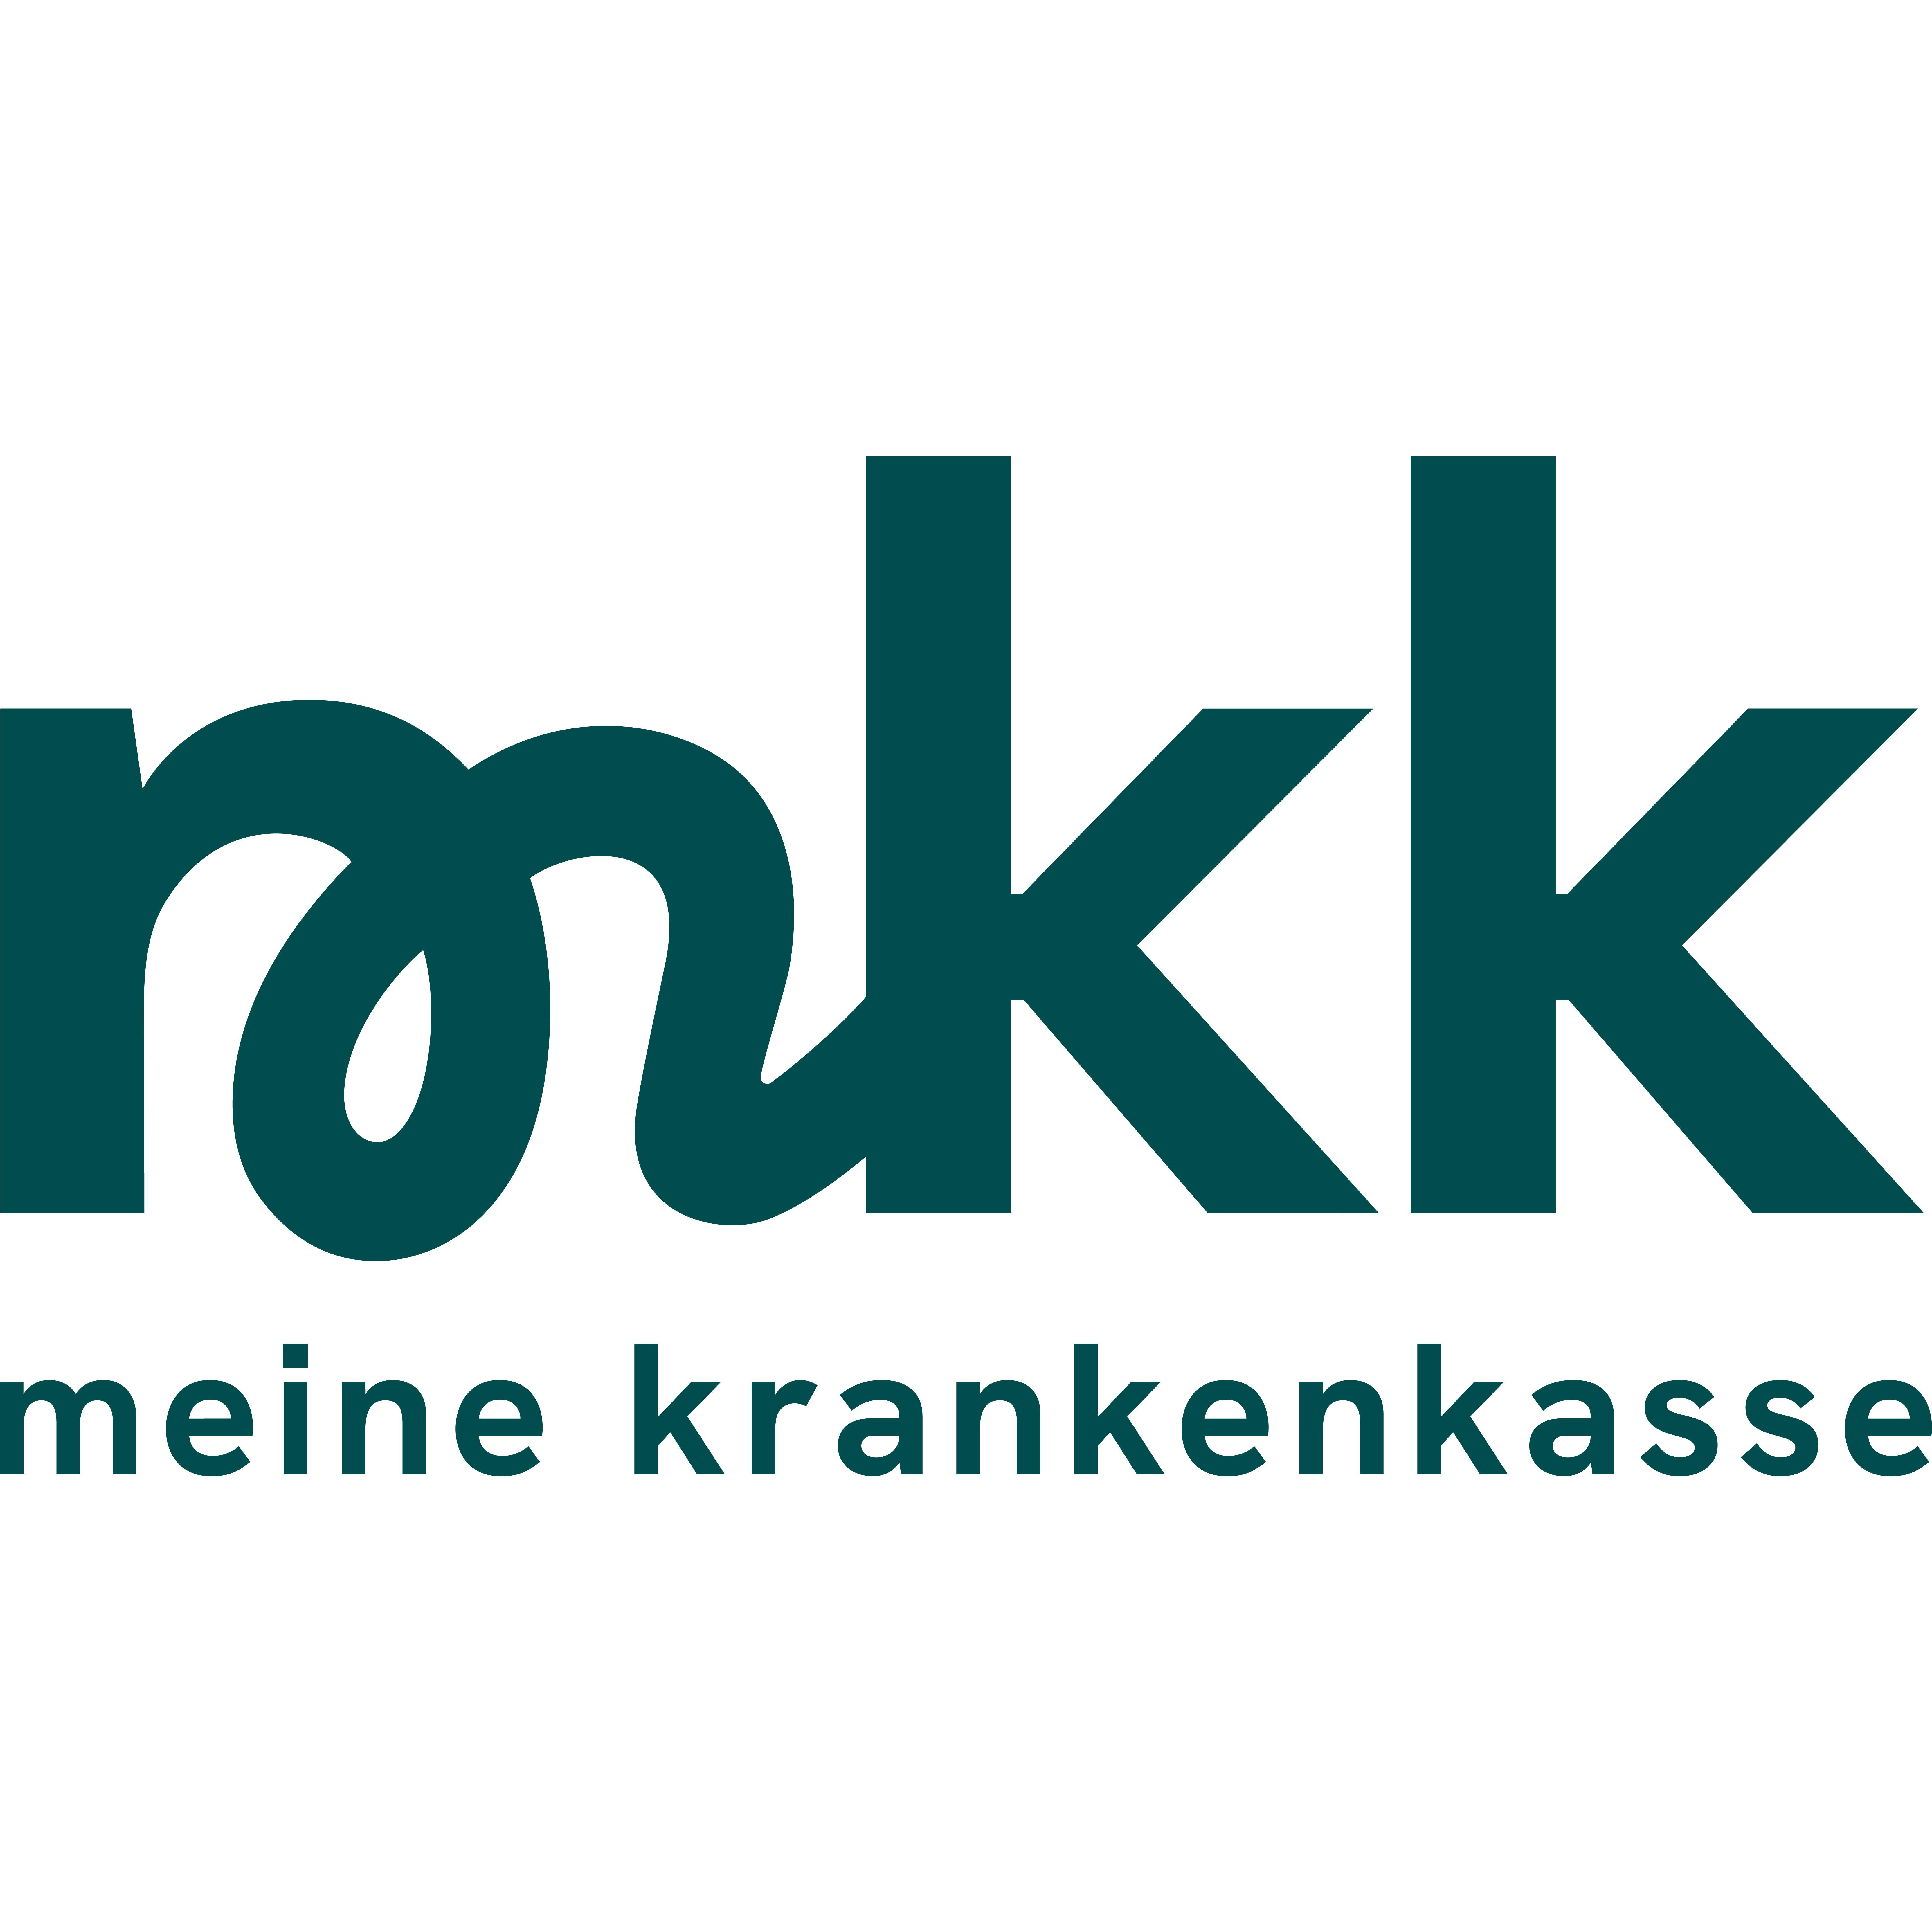 mkk - meine krankenkasse in Landshut - Logo